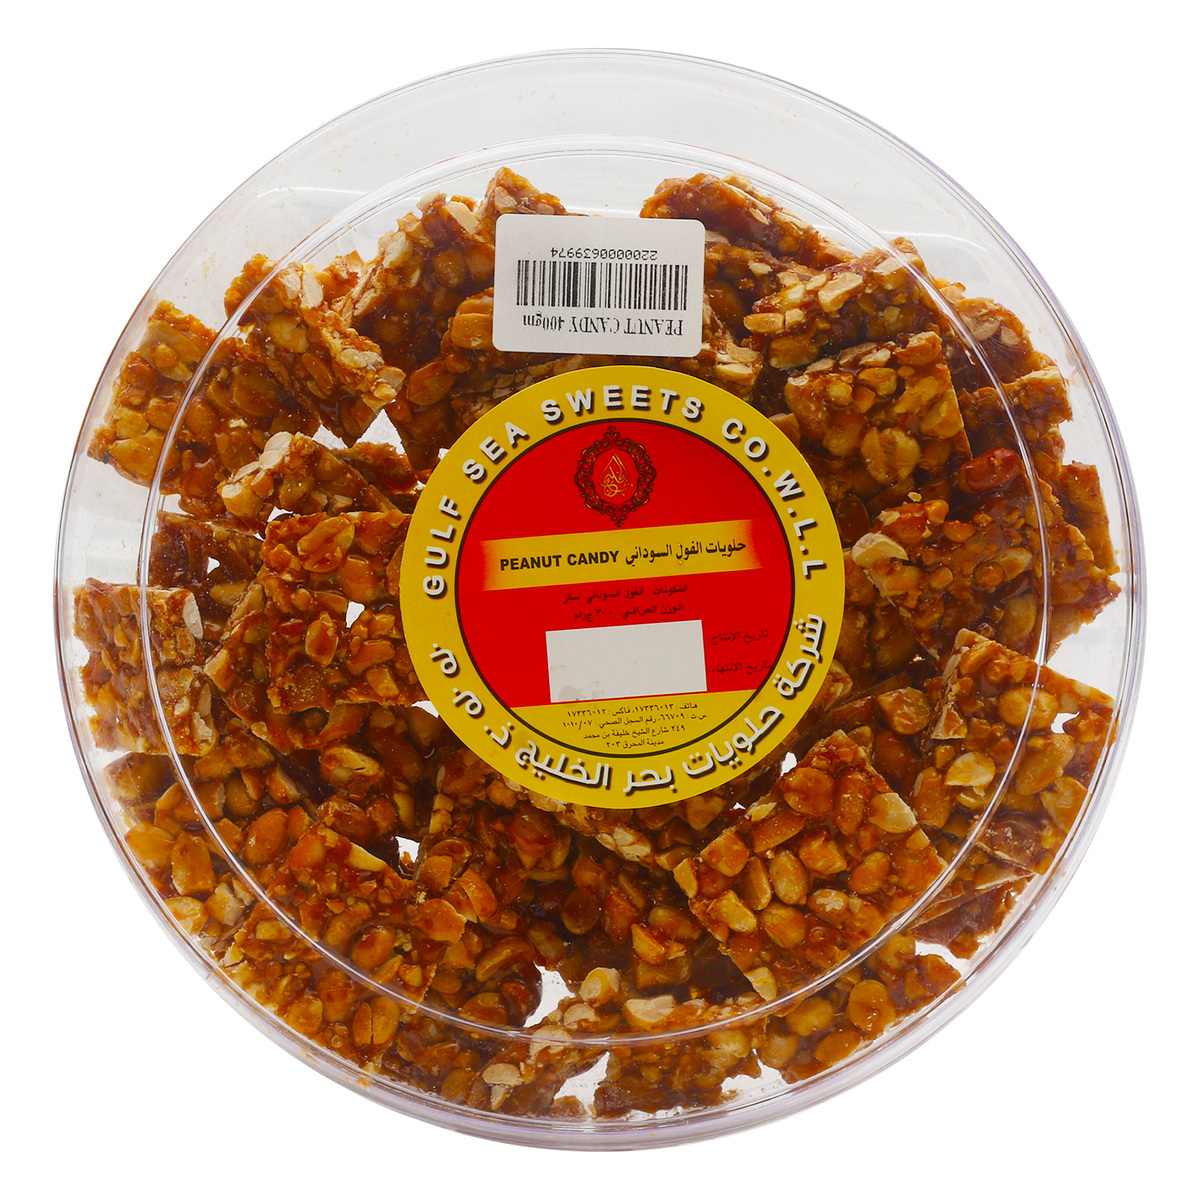 Gulf Sea Peanut Candy 400 g